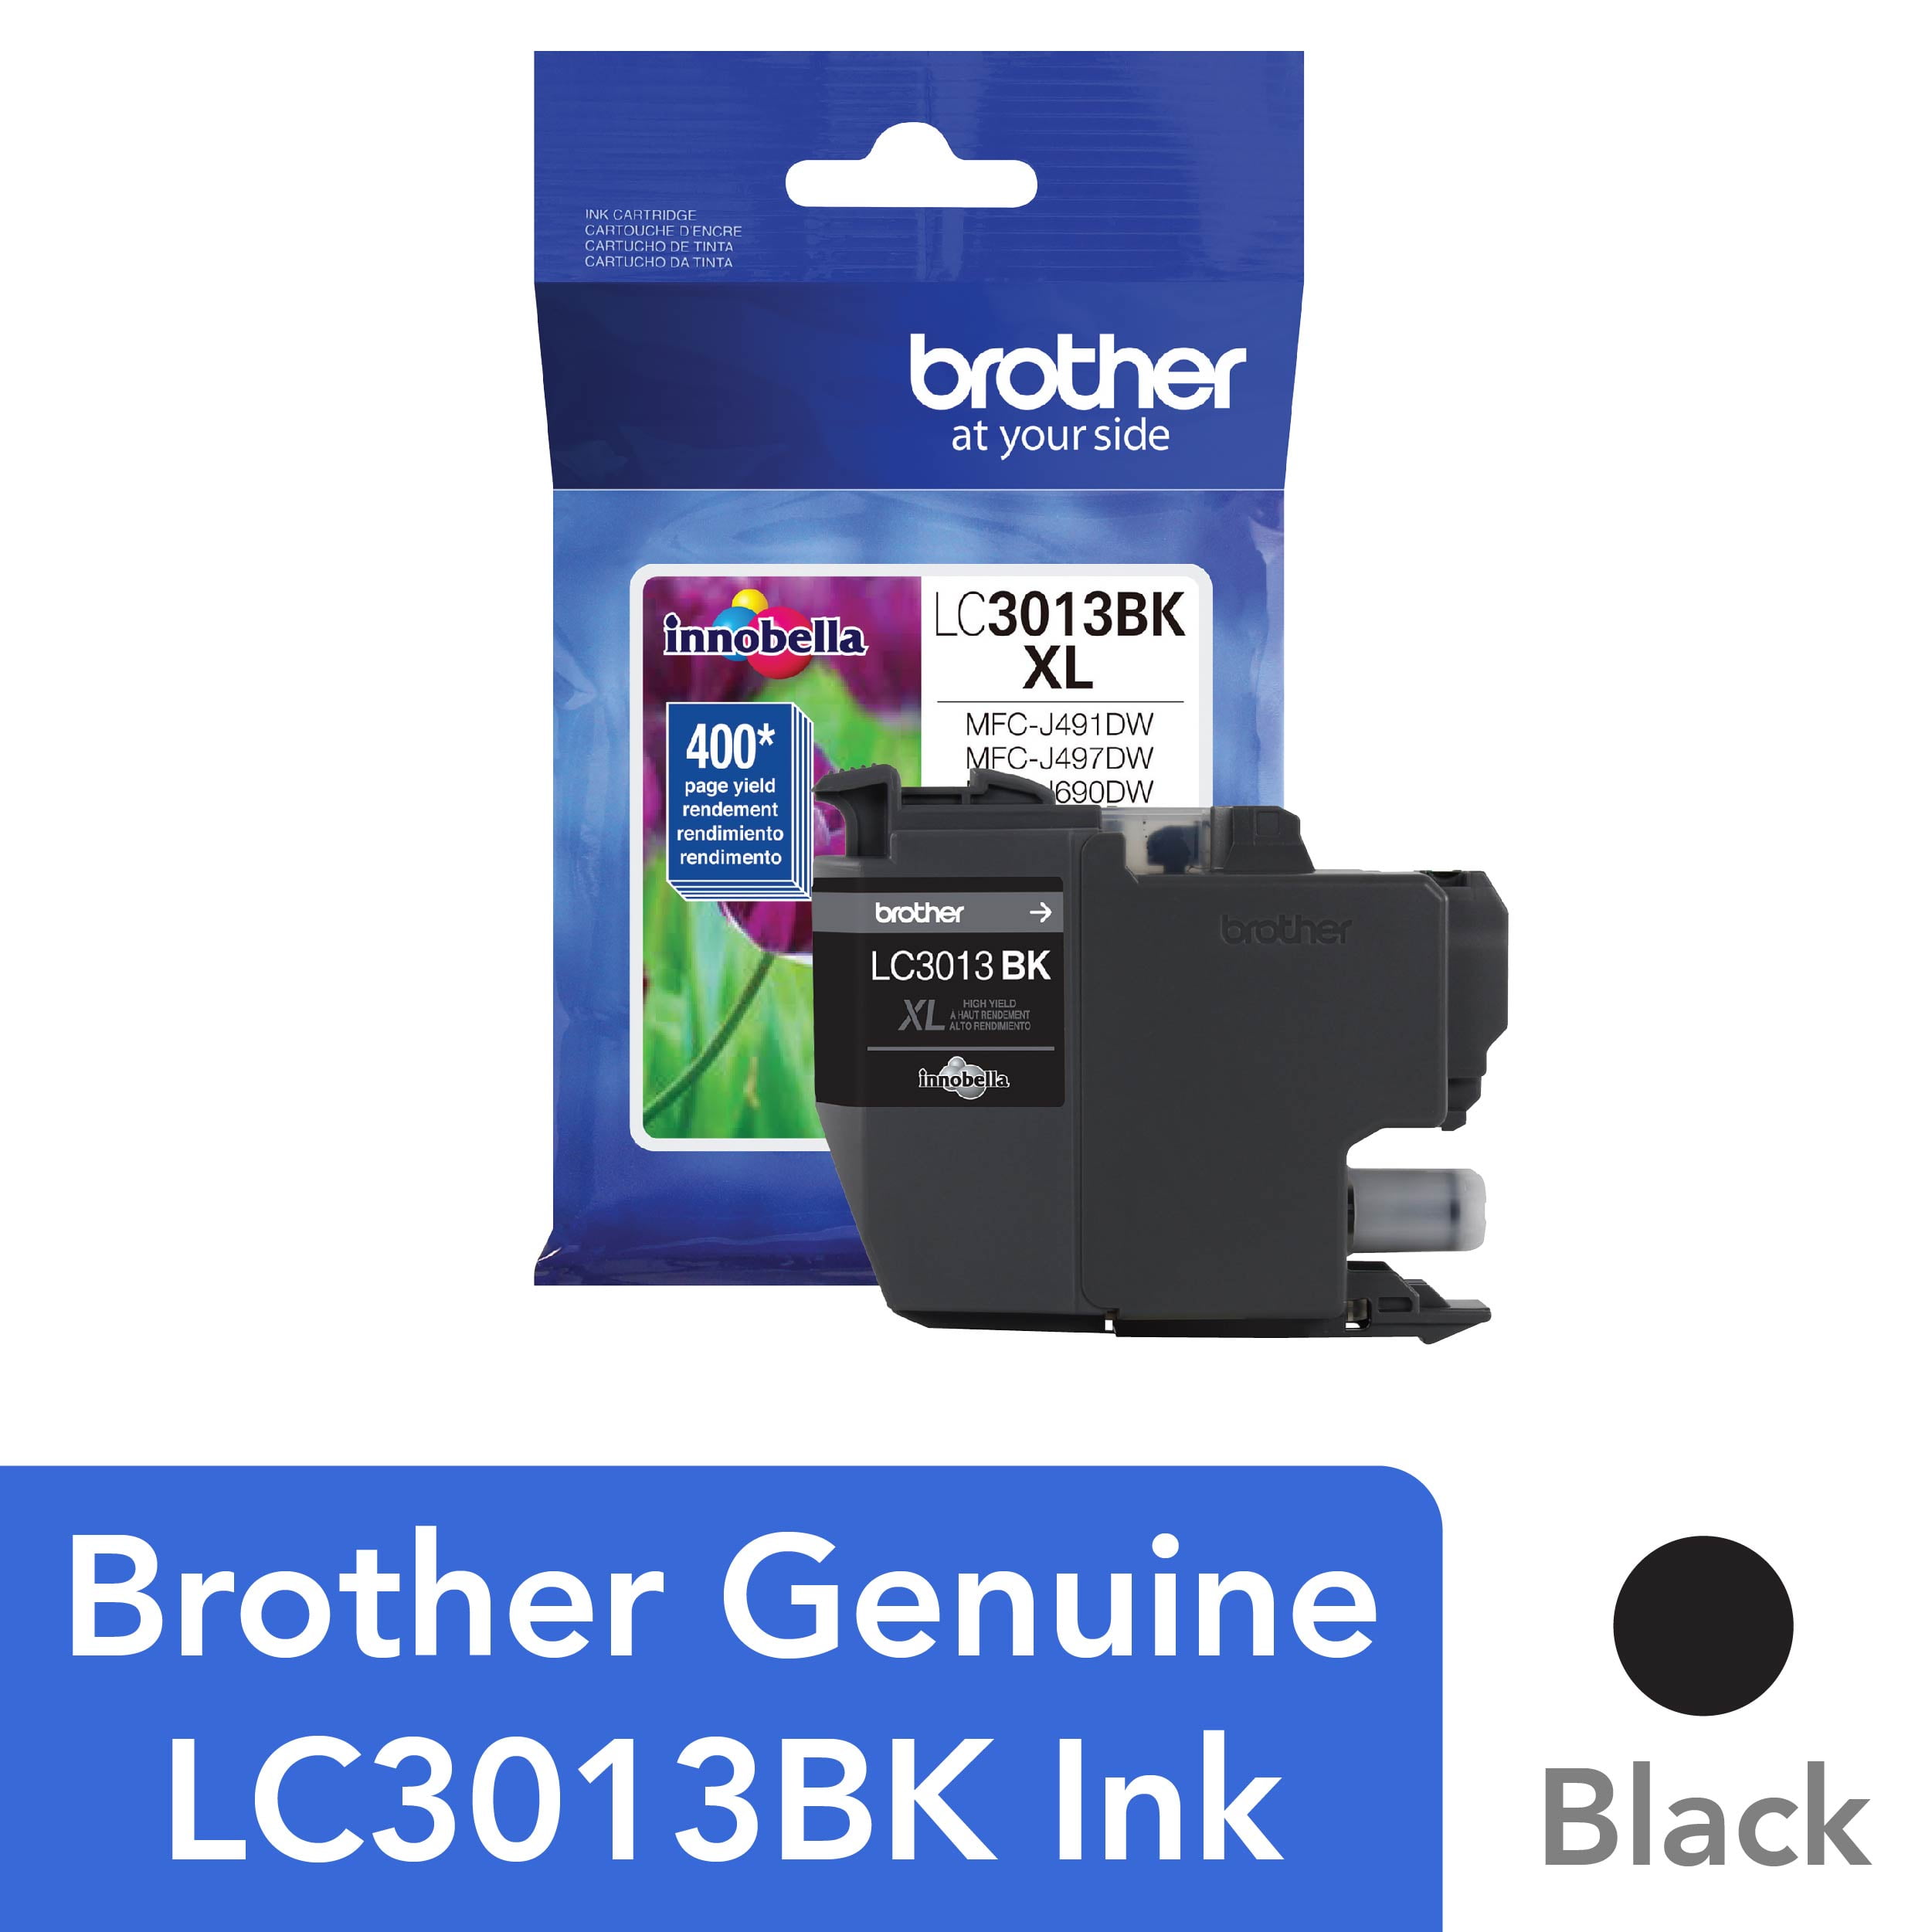 Brother Genuine LC101BK Black Printer Ink Cartridge